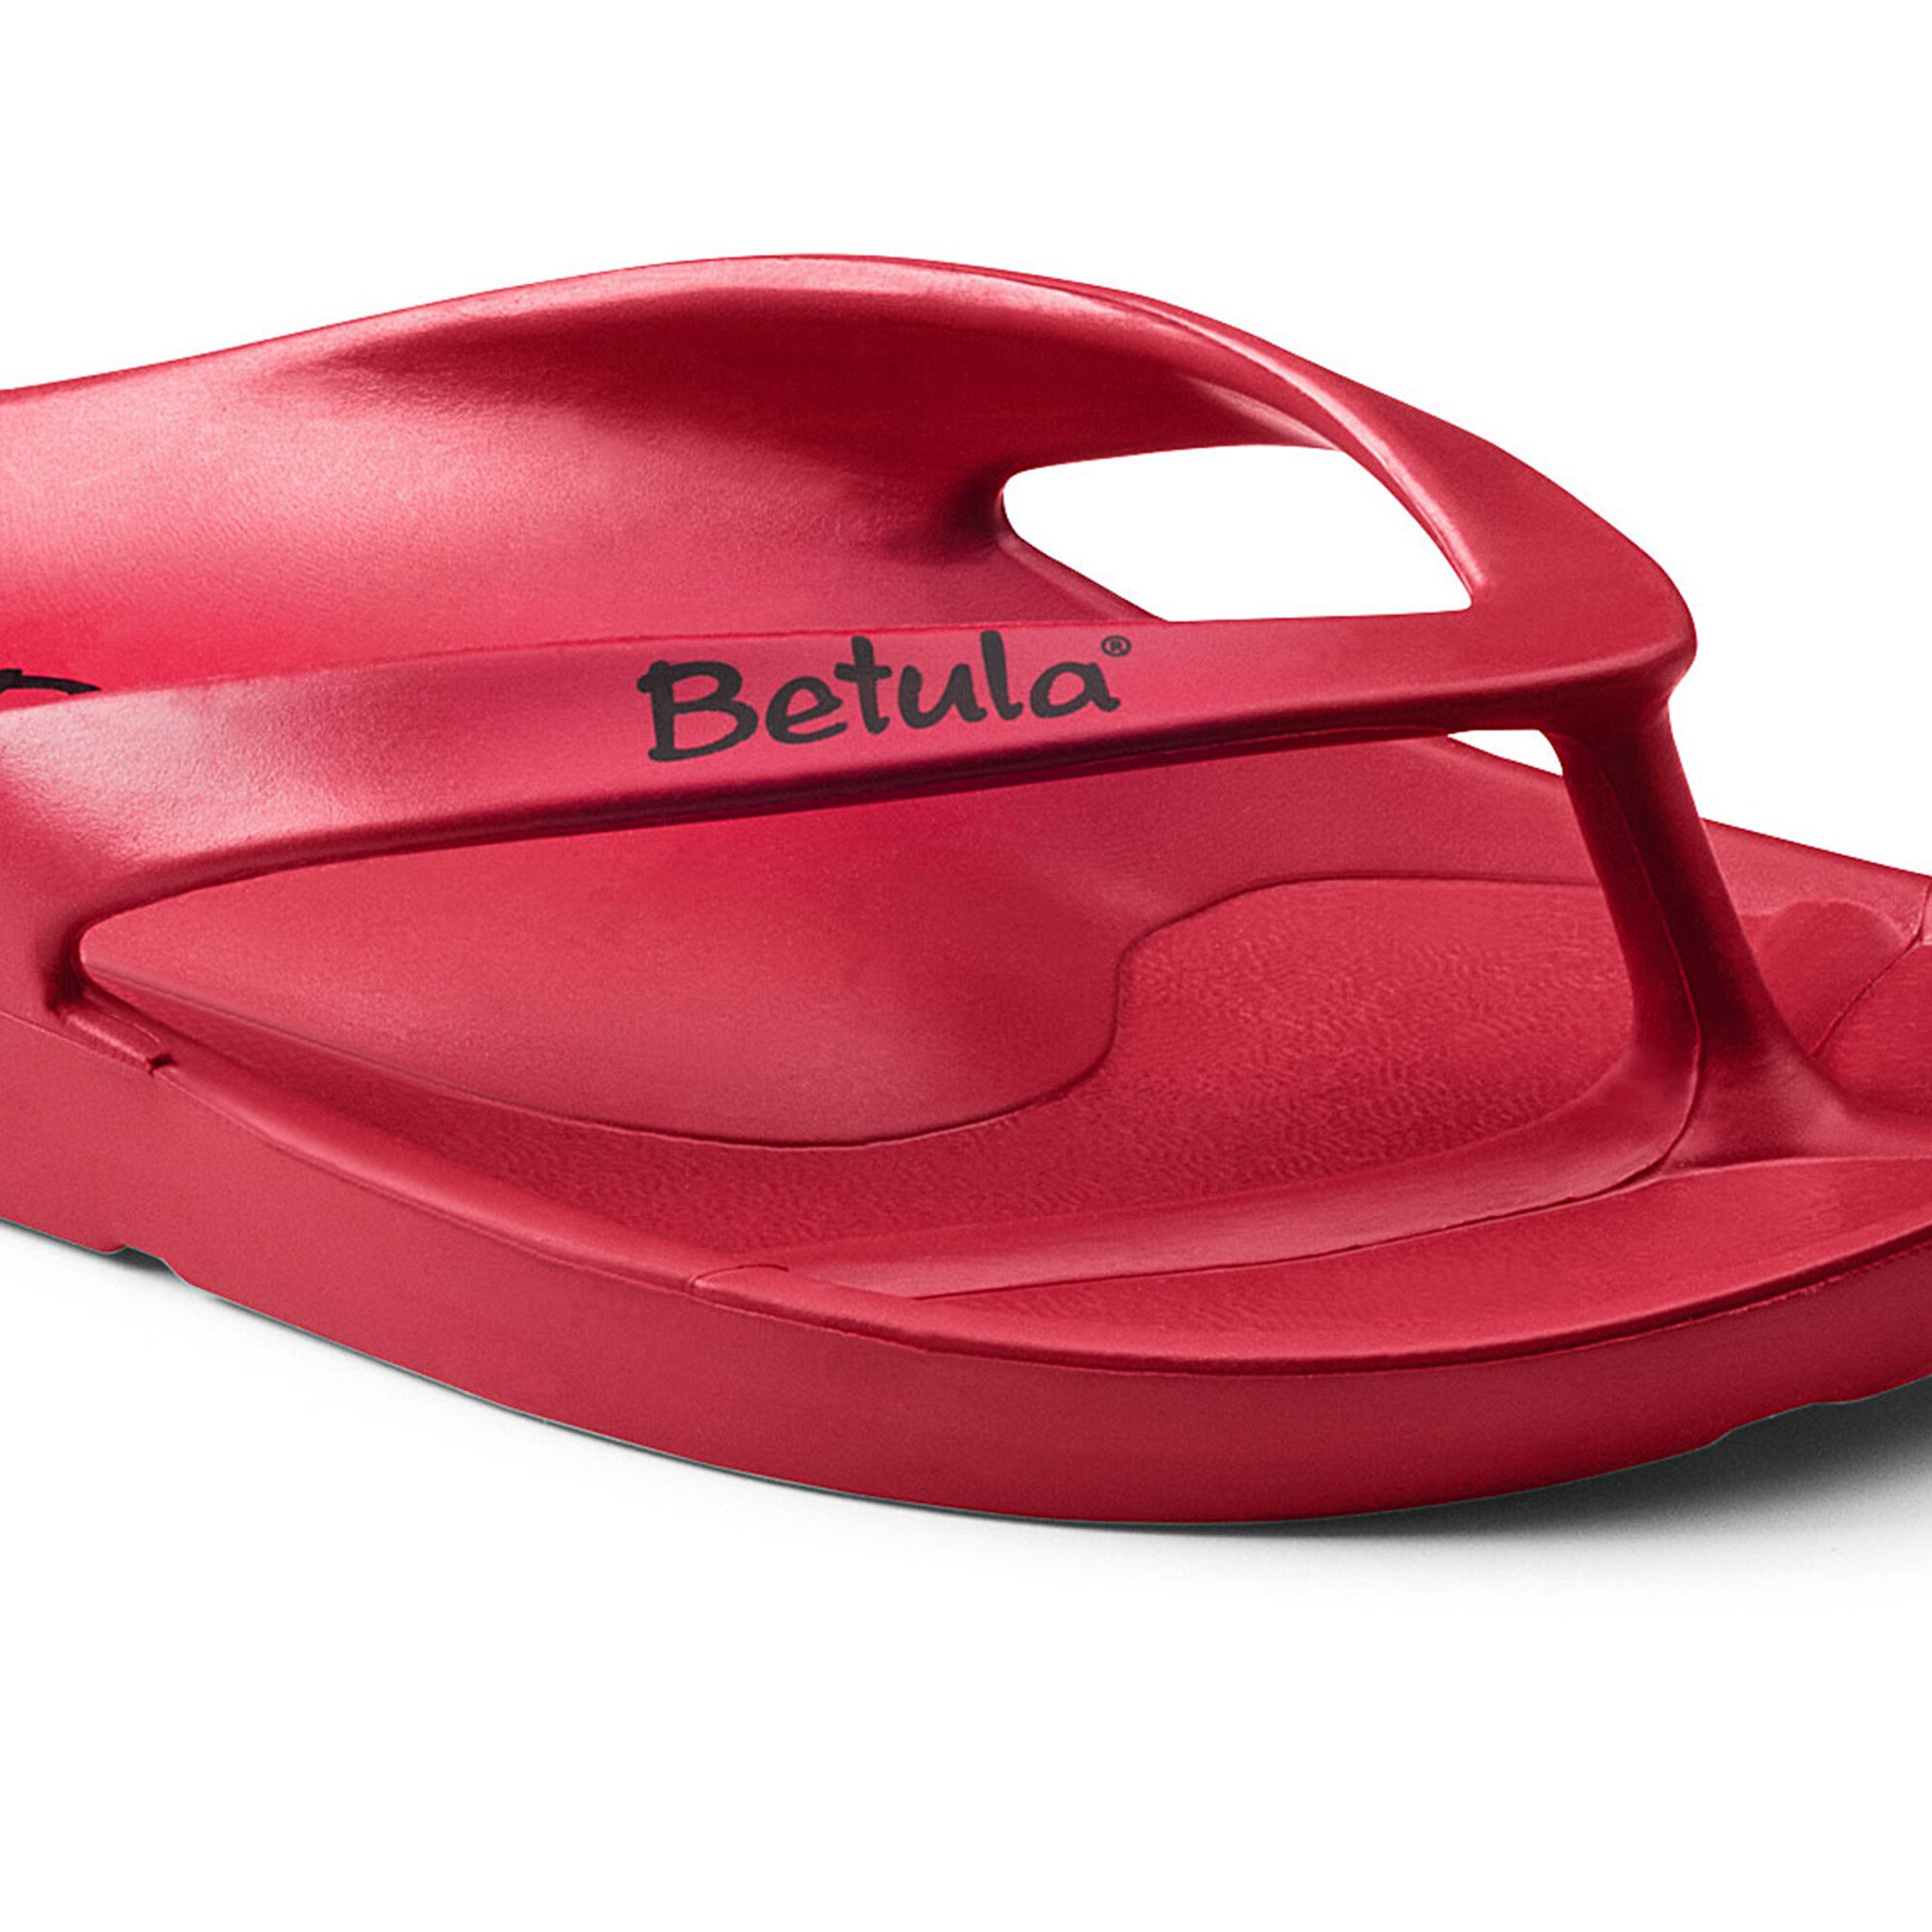 betula energy slippers